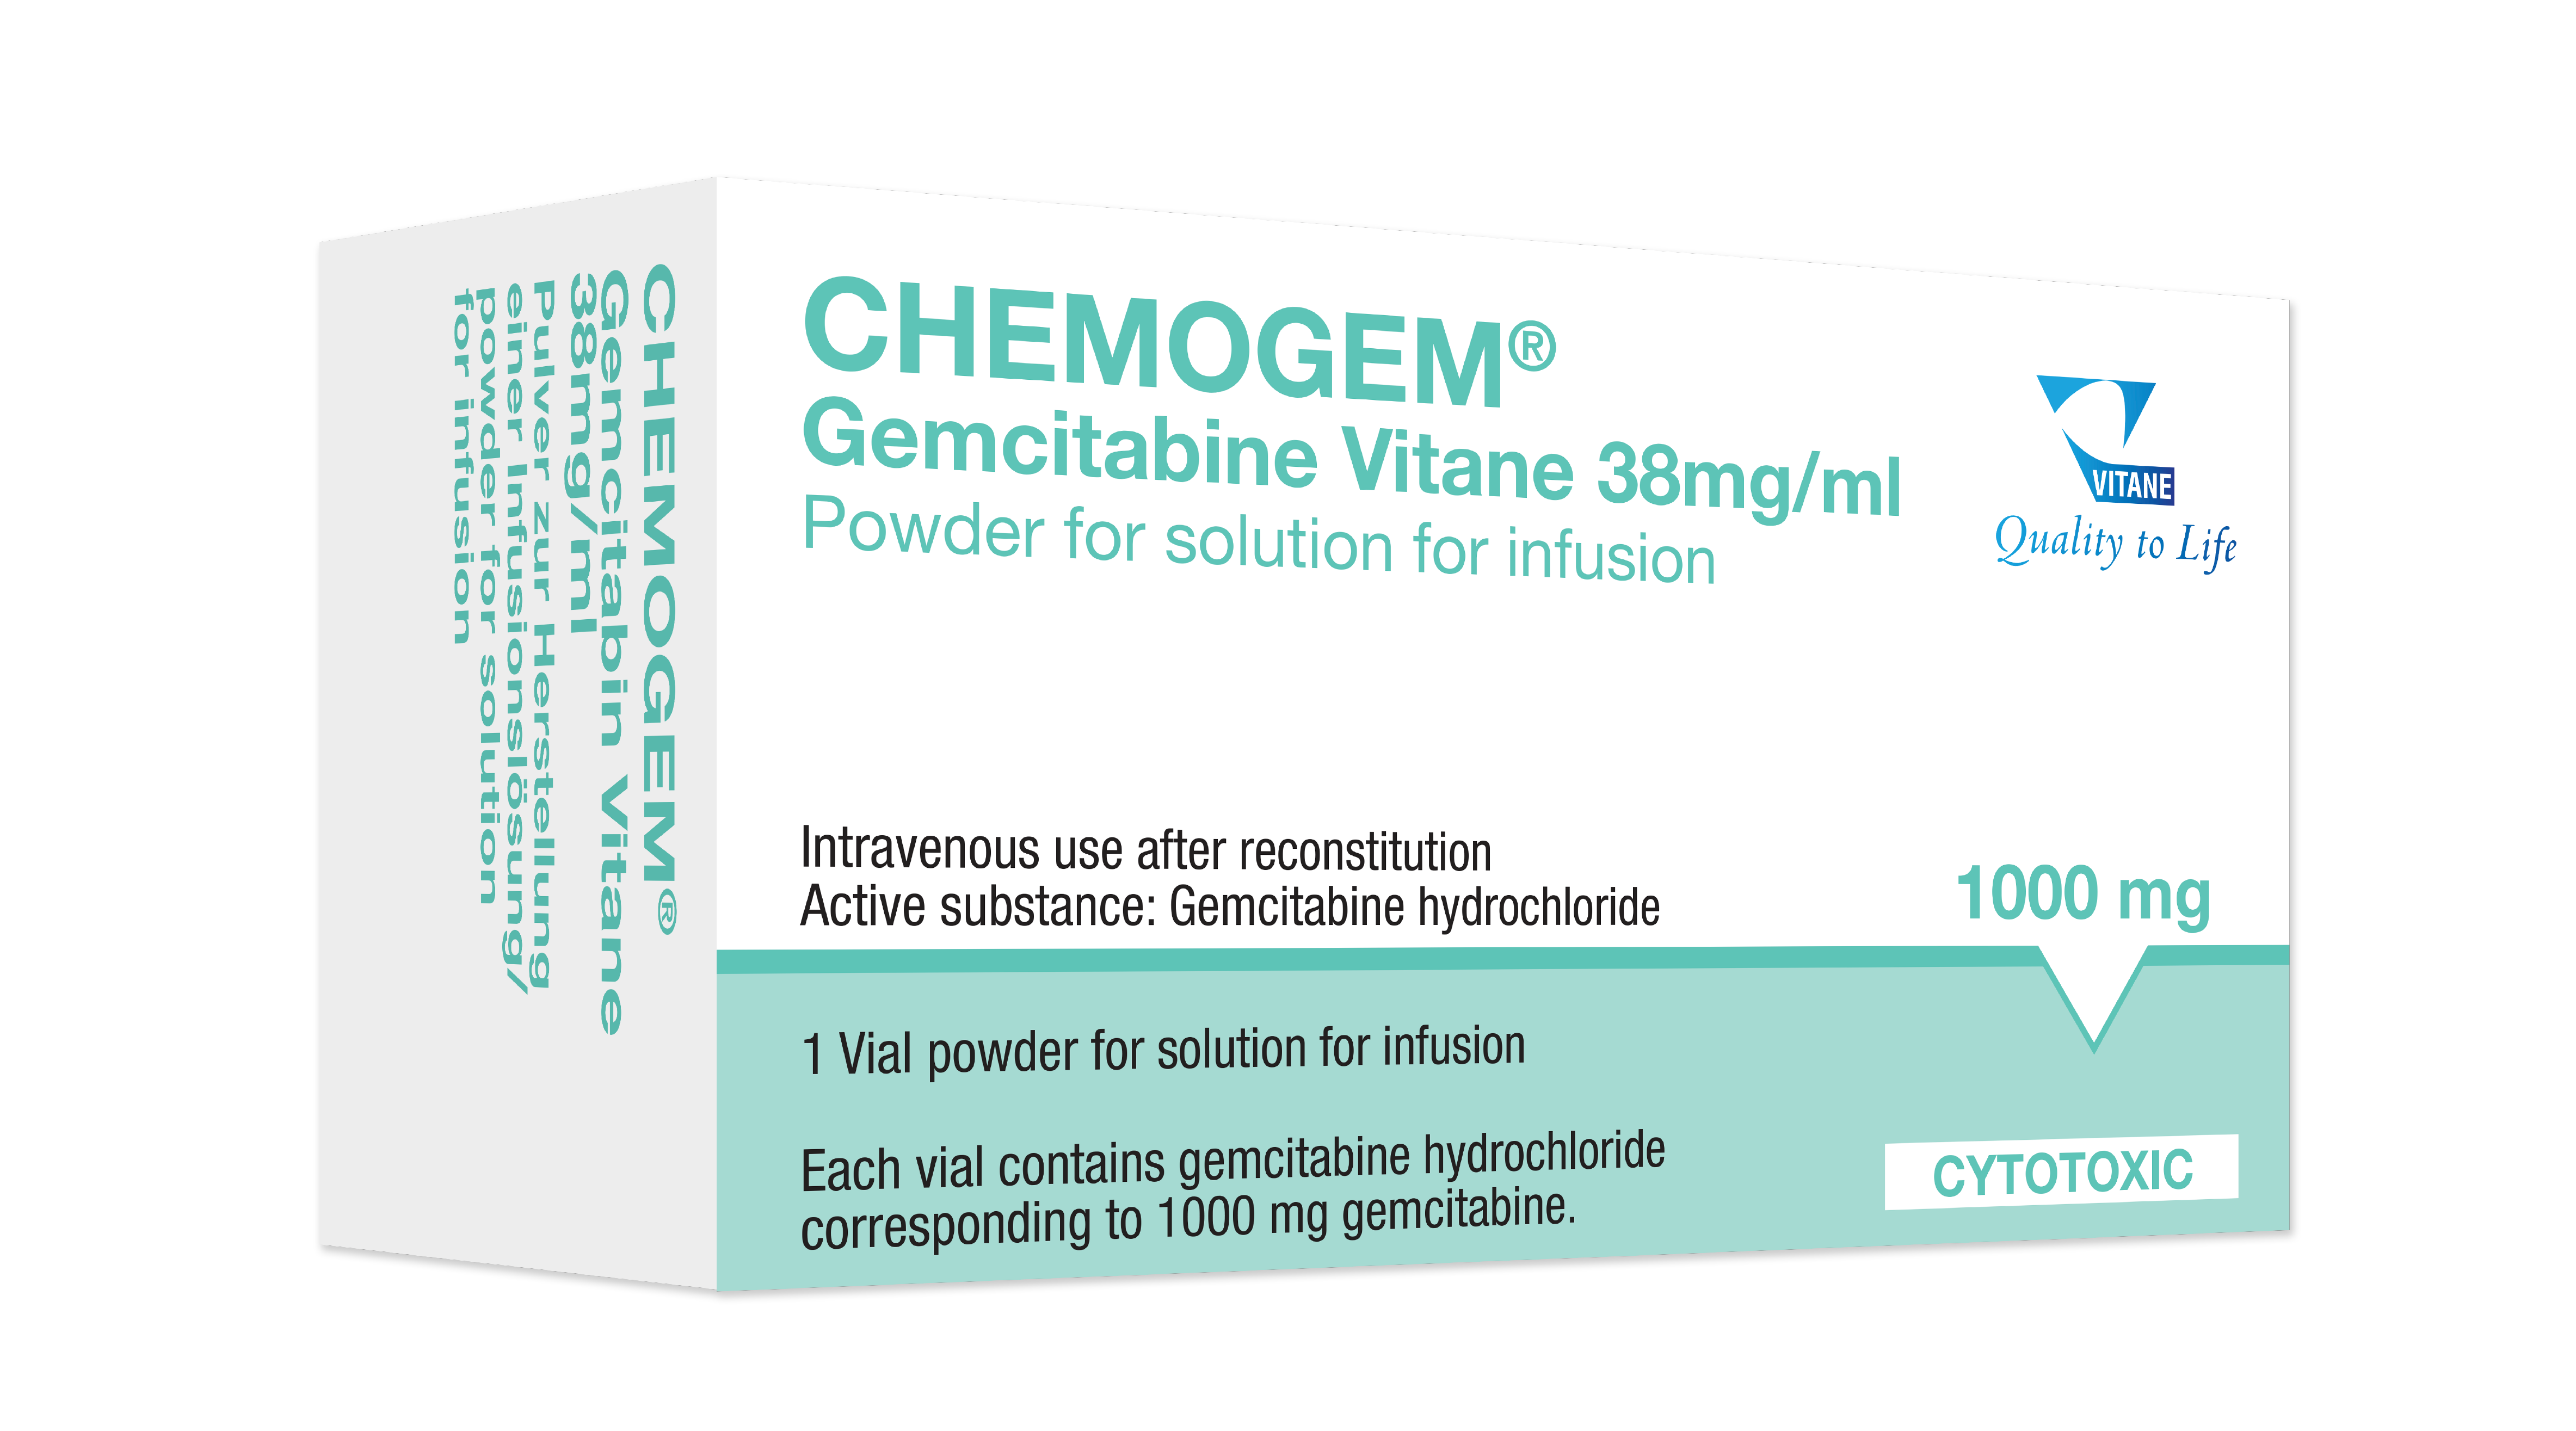 CHEMOGEM - Gemicitabin Vitane 38mg/ml